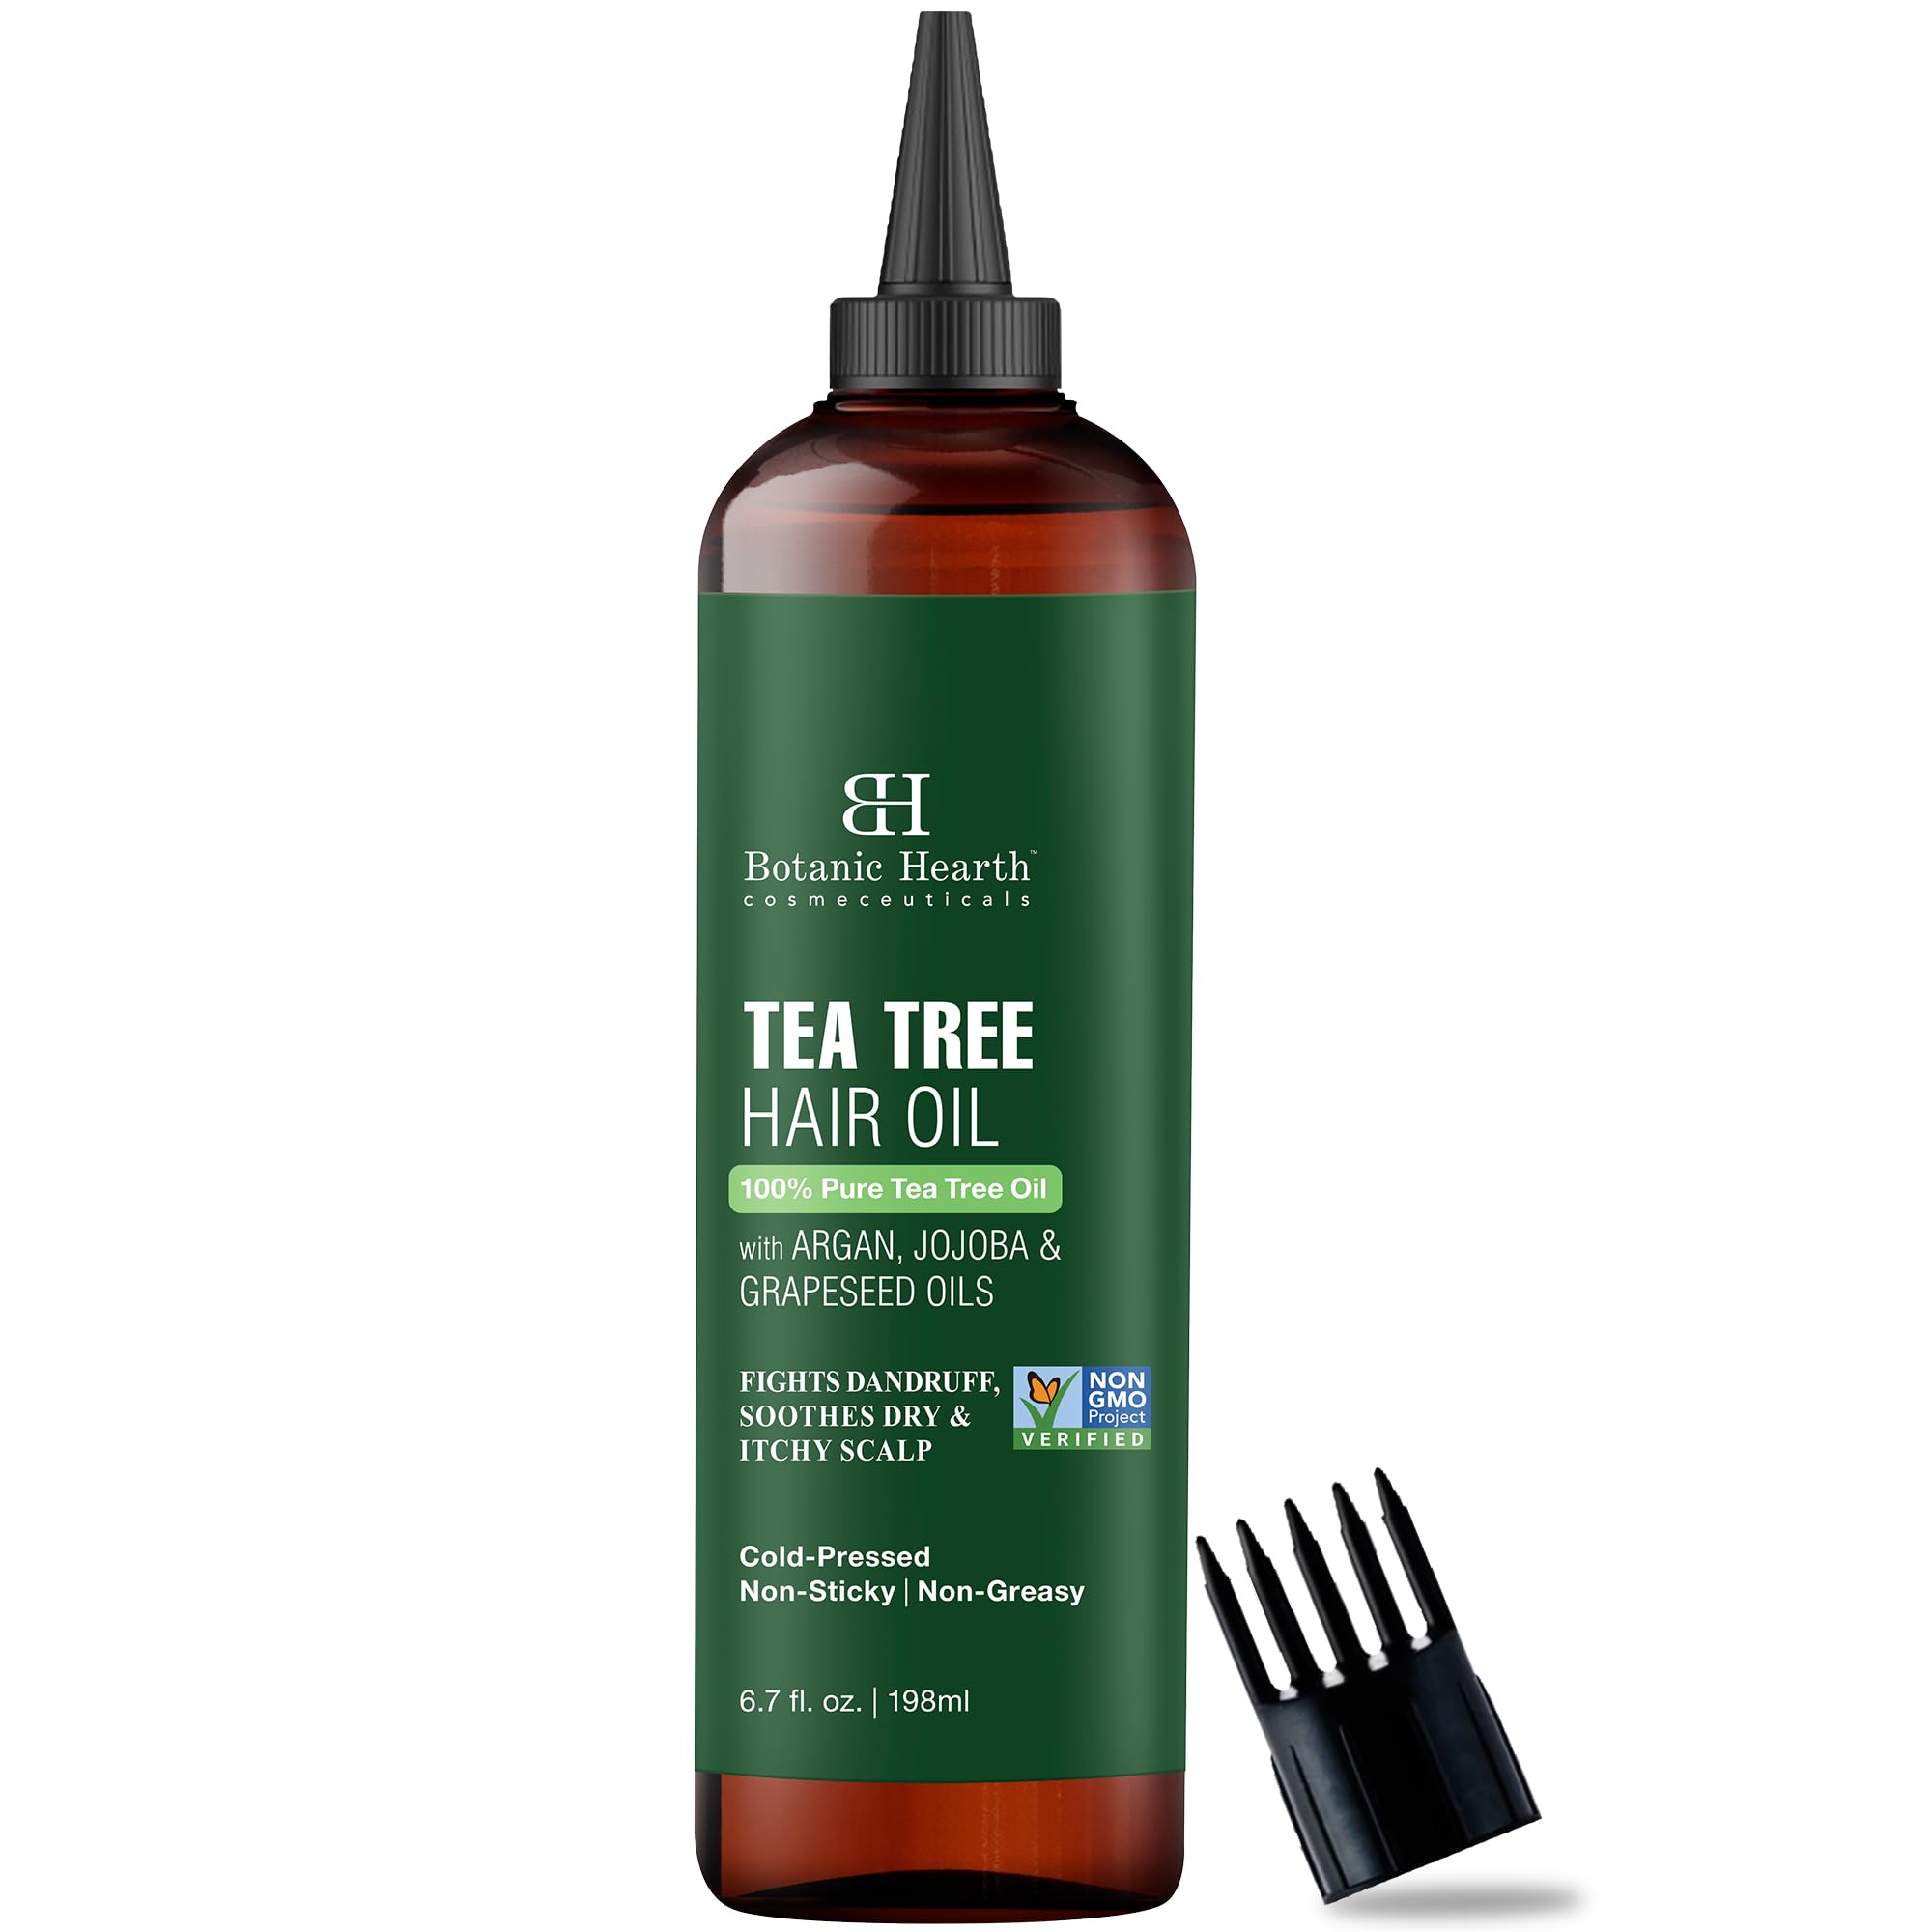 Tea Tree Oil dandruff shampoo against dry, itchy scalp and greasy hair